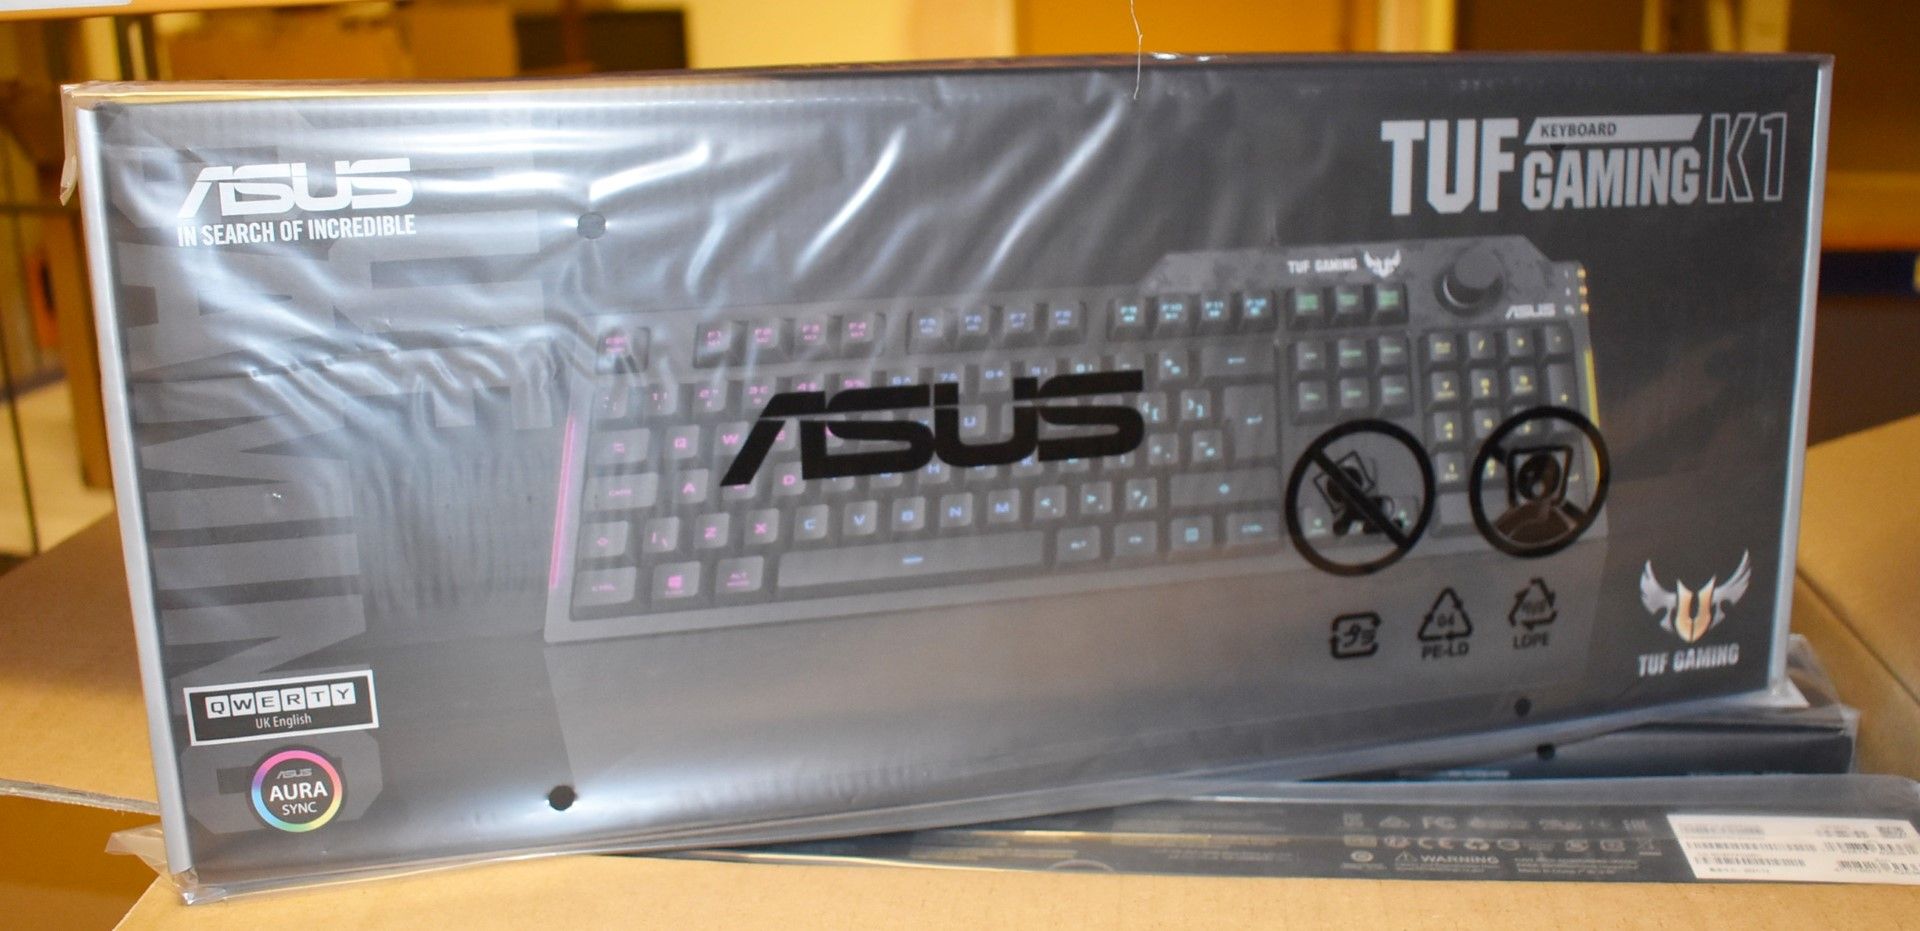 1 x Asus TUF K1 RGB Gaming Keyboard - New Boxed Stock - RRP £49.99